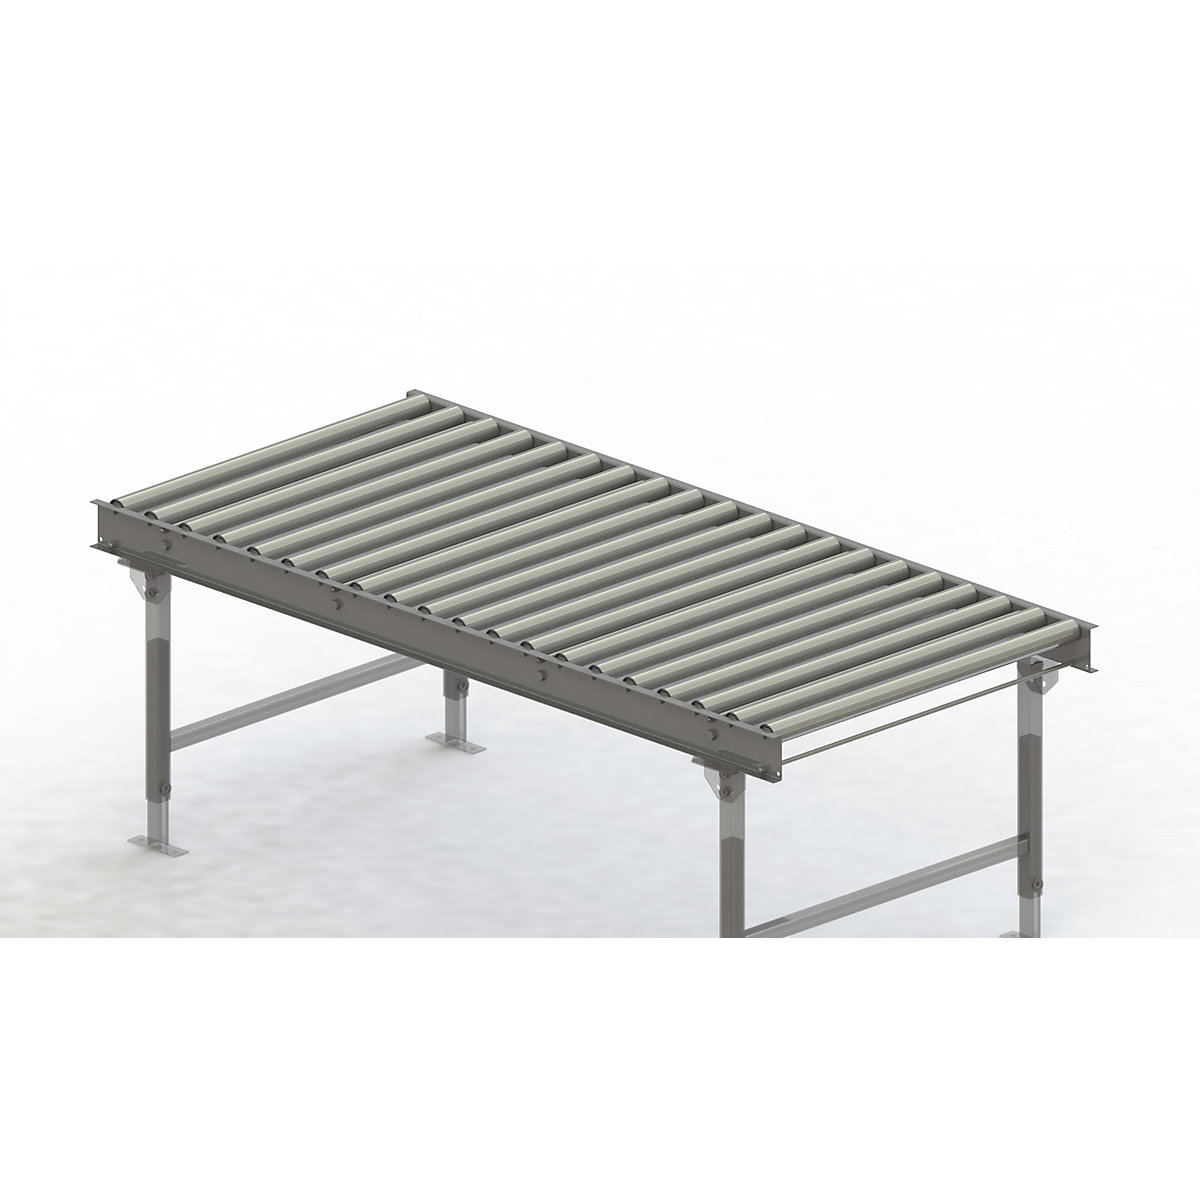 Gura – Roller conveyor, steel frame with zinc plated steel rollers, track width 900 mm, distance between axles 100 mm, length 2 m